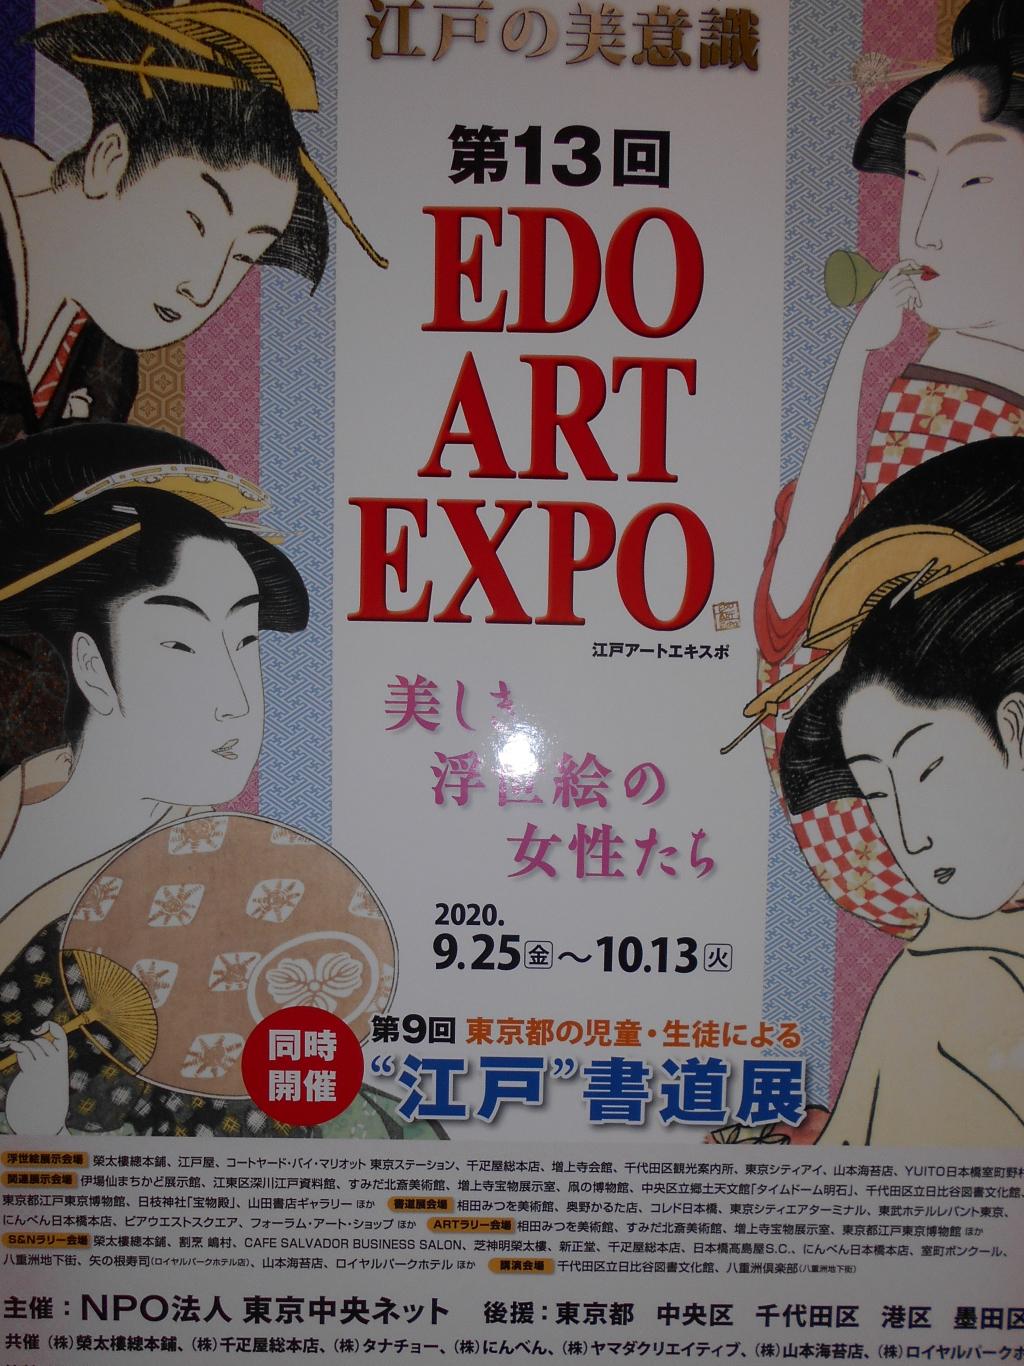 Edo Art Expo 美しき浮世絵の女性たち 芸術の秋 By 銀造 中央区観光協会特派員ブログ